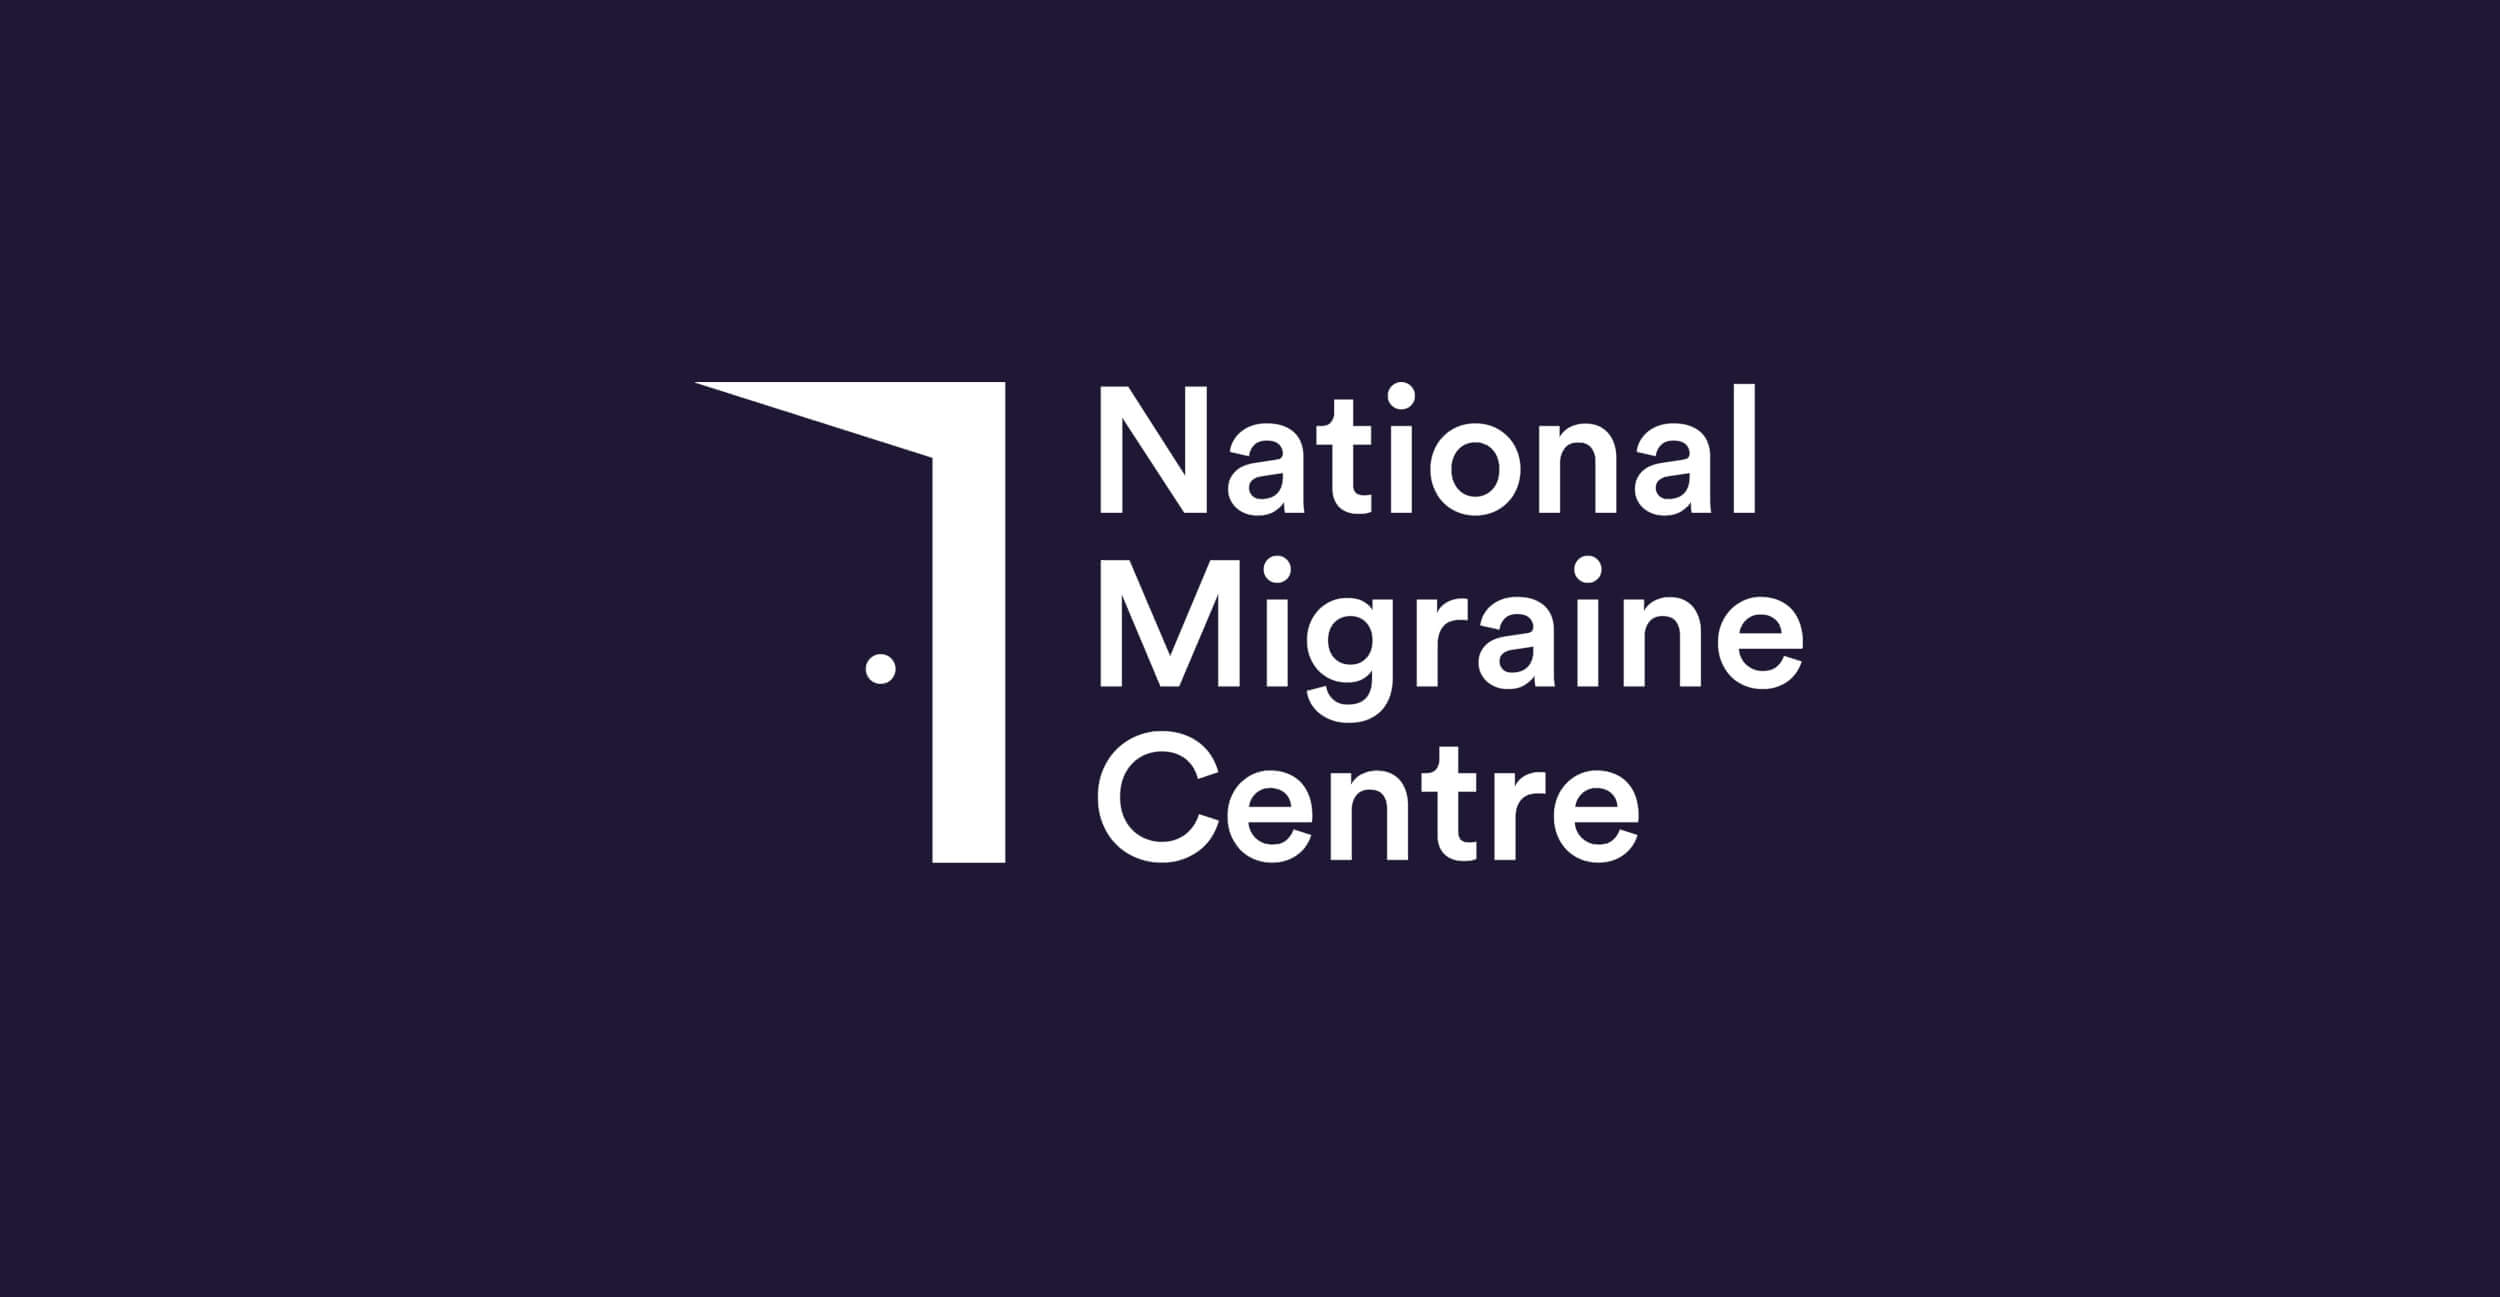 National Migraine Centre identity image